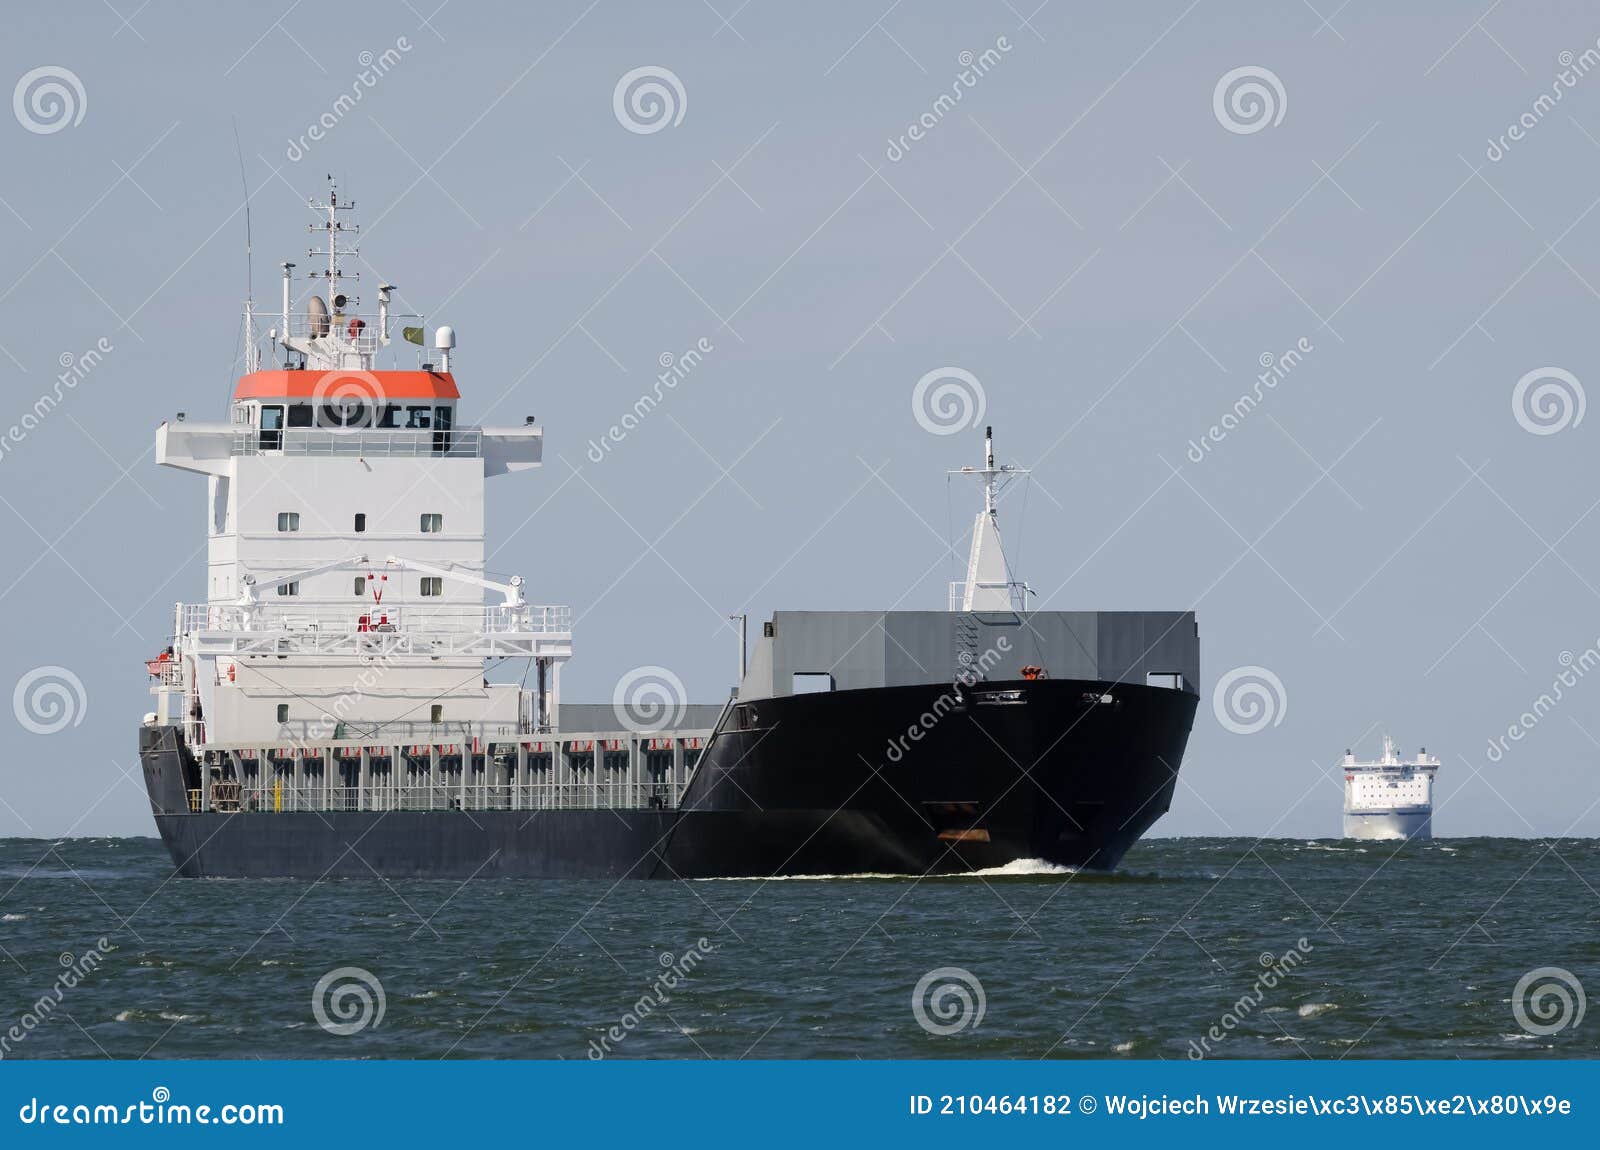 merchant vessel